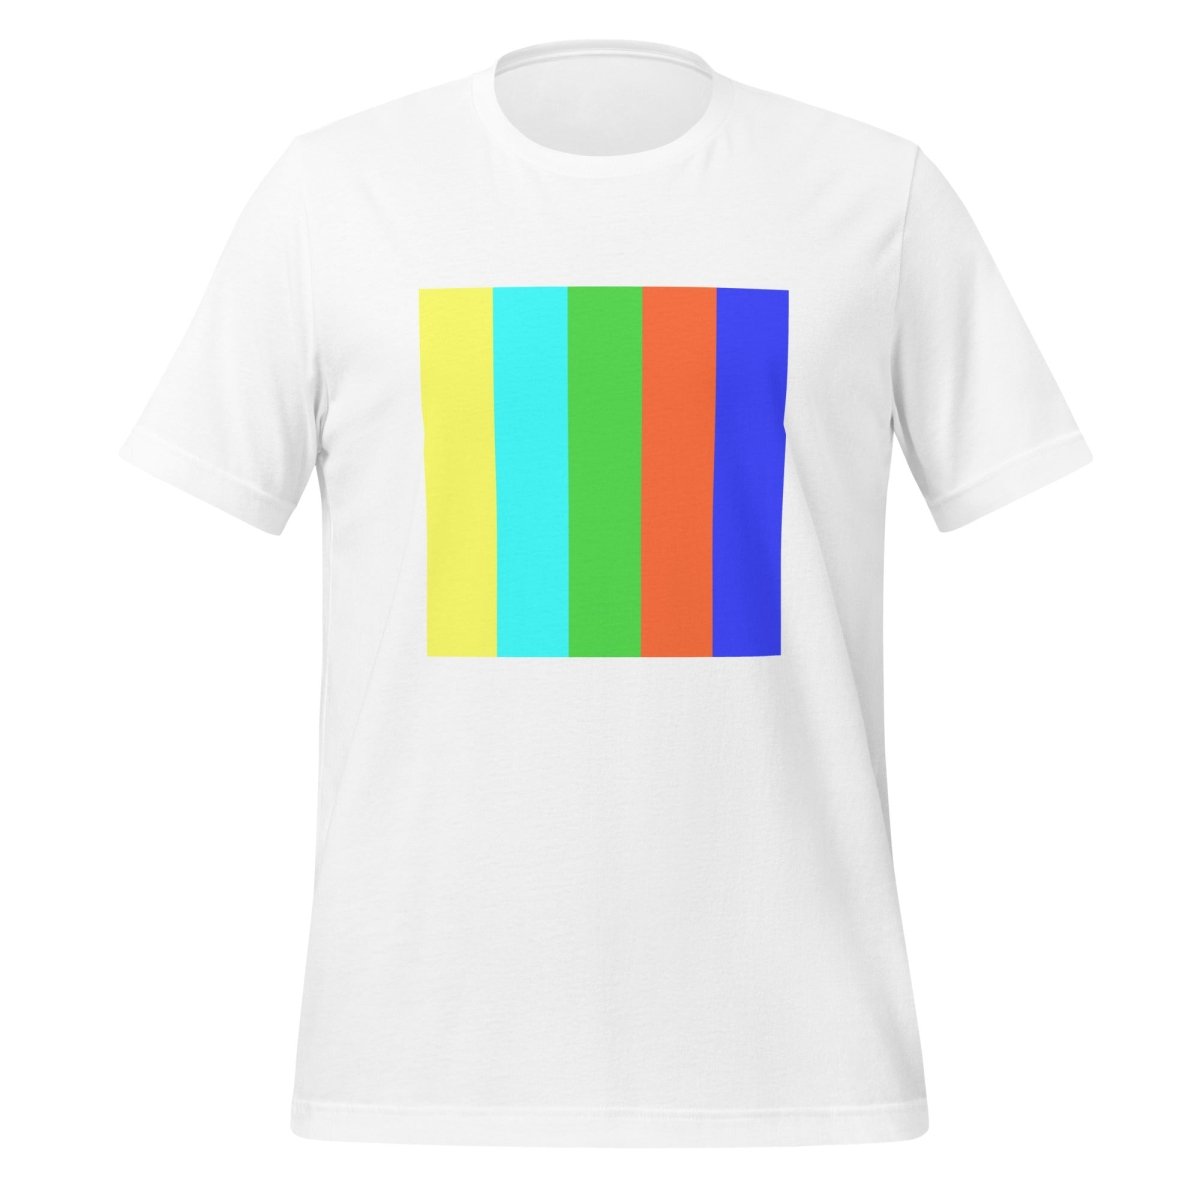 DALL - E 2 Square Watermark T - Shirt (unisex) - White - AI Store